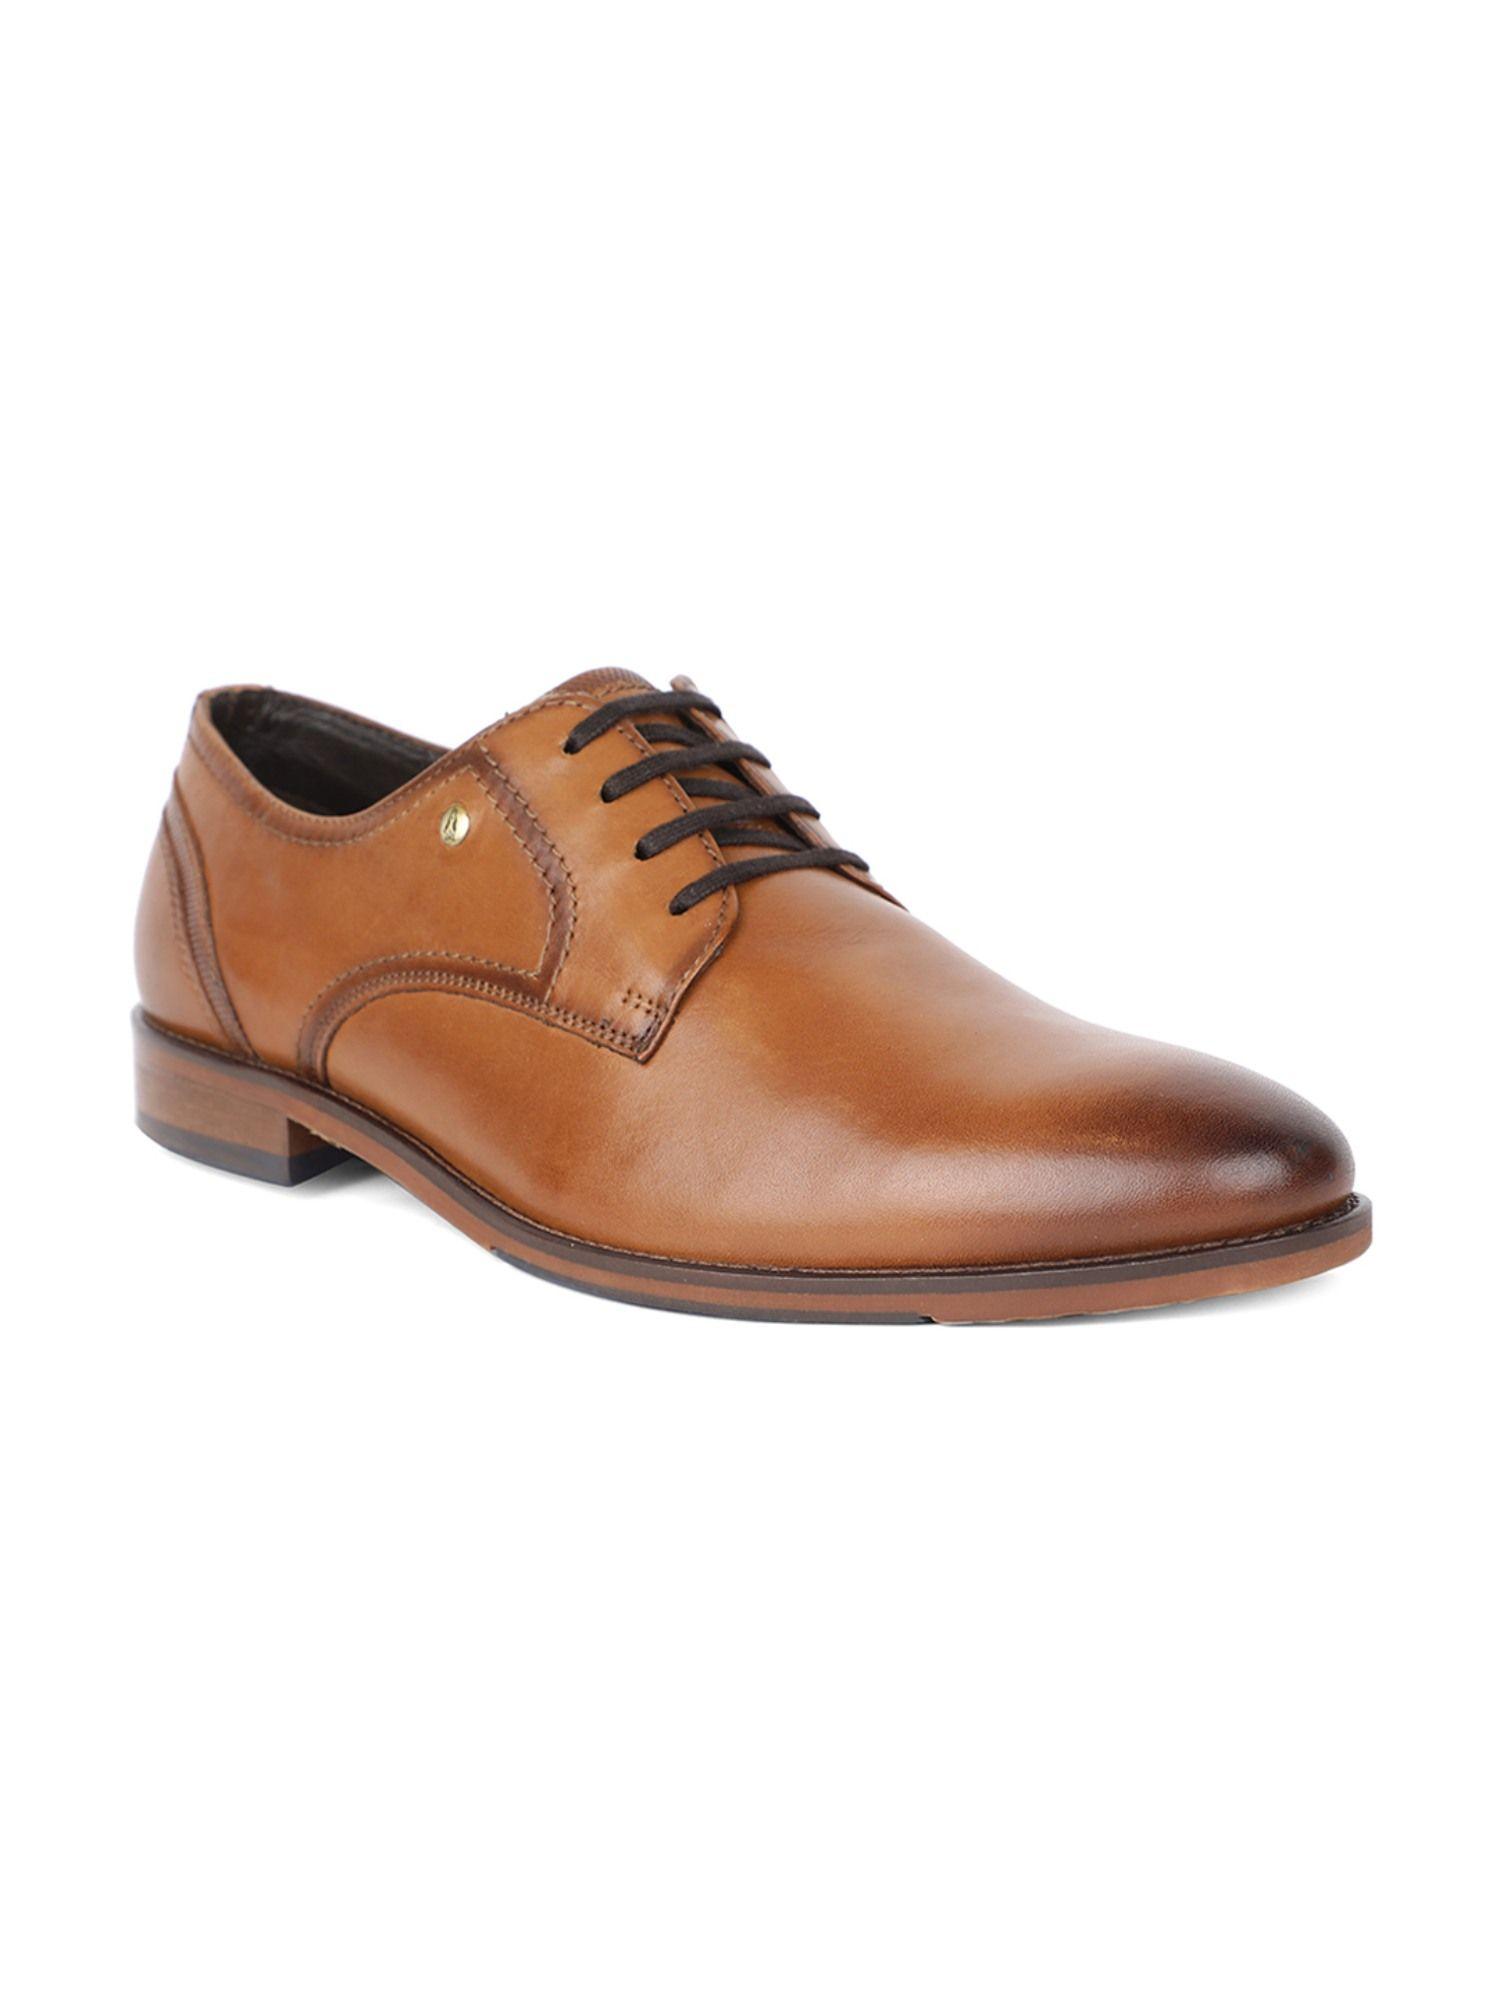 tan formal shoes for men